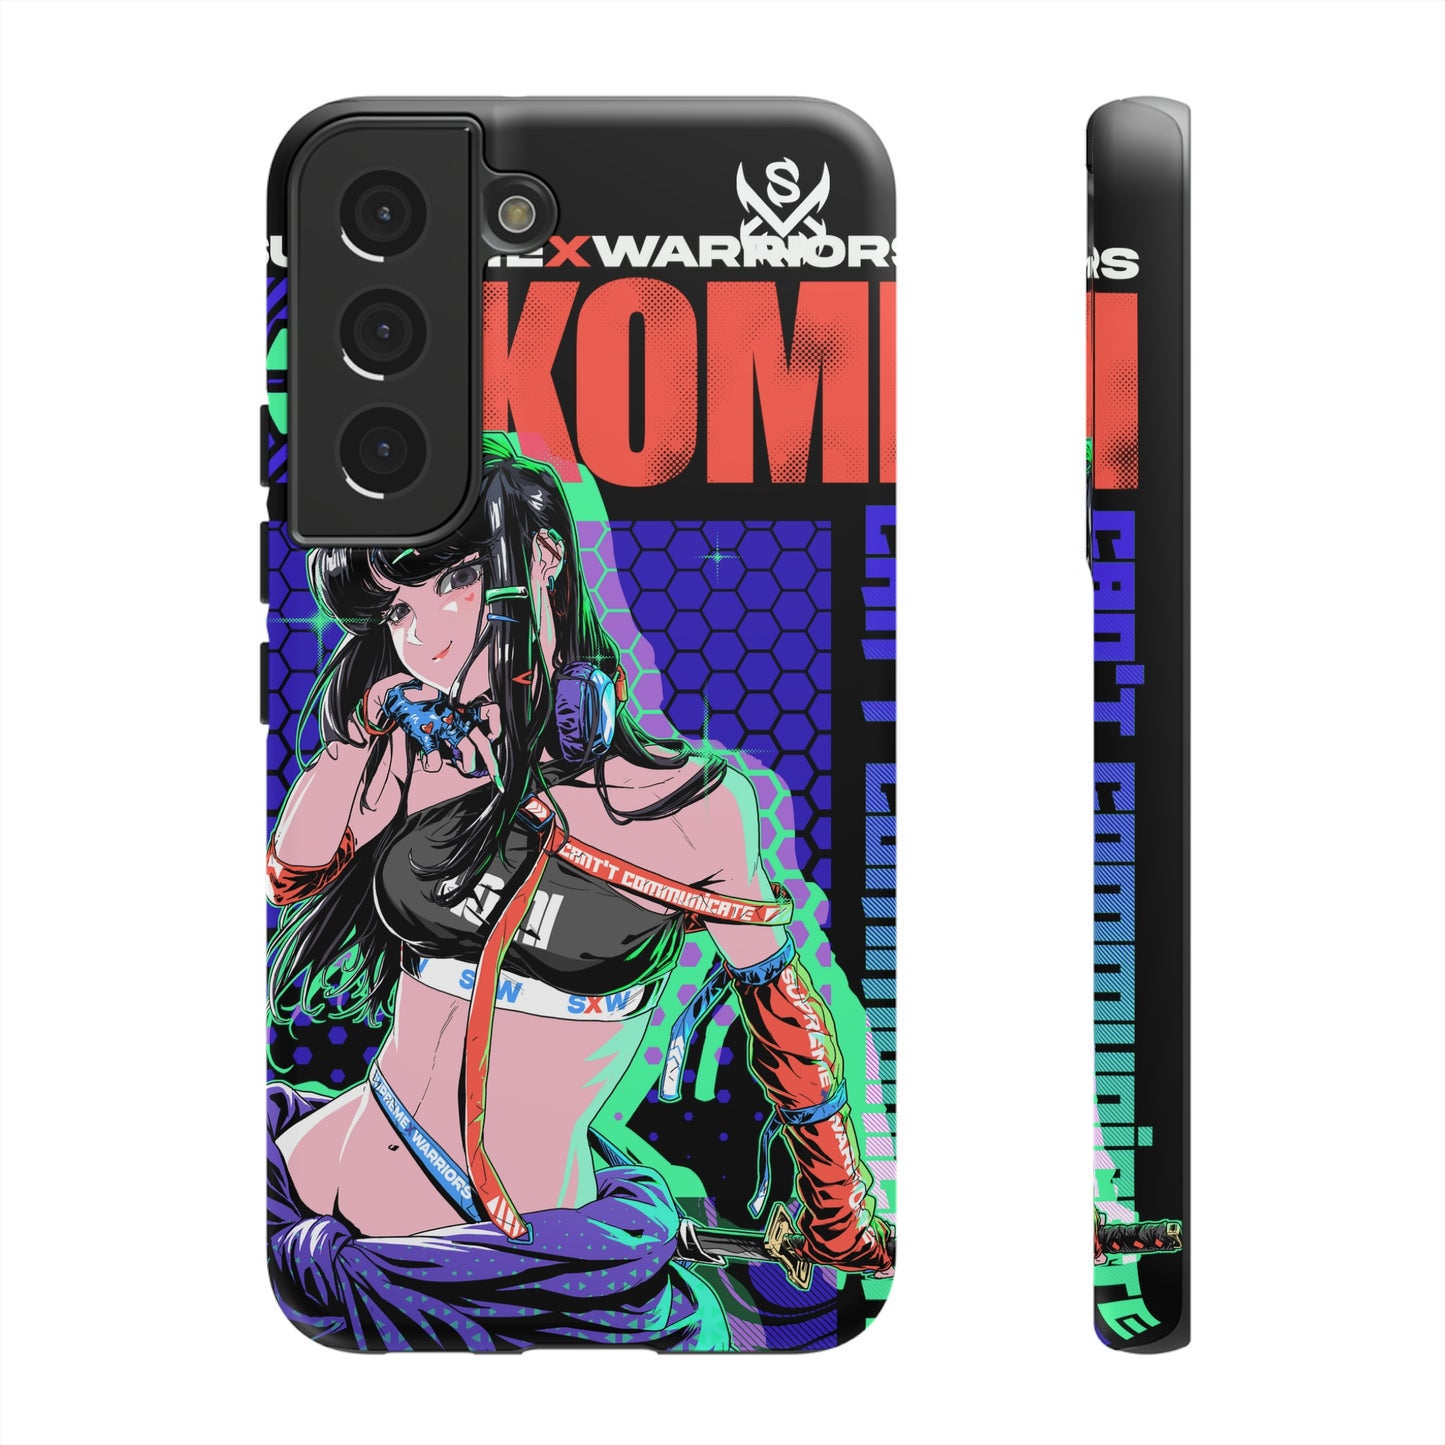 Komi / Samsung Galaxy Cases - LIMITED